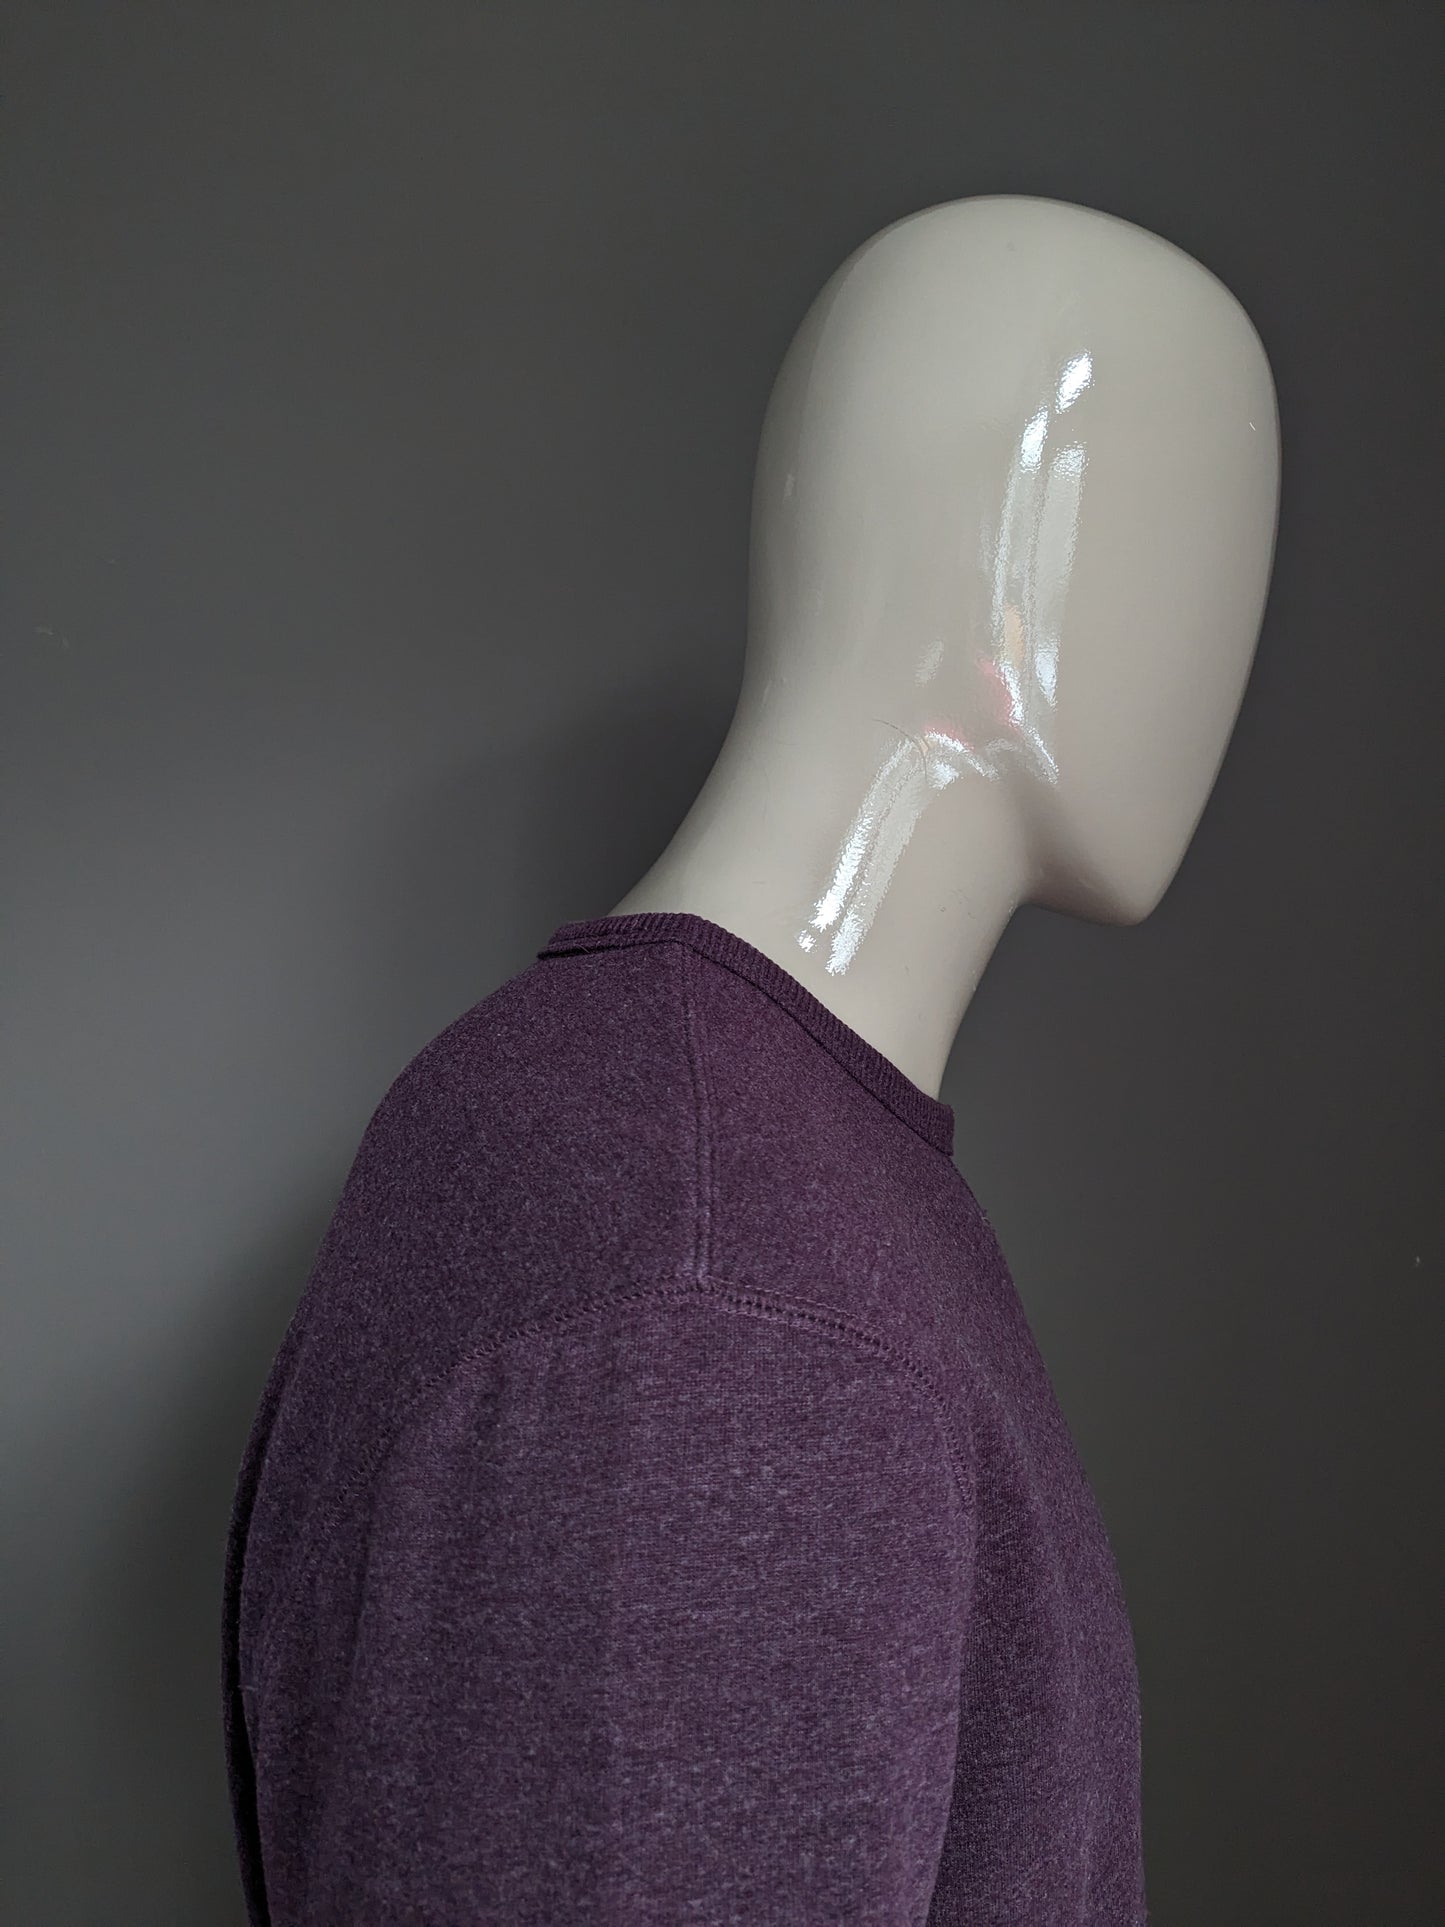 M&S Collection Basic trui. Paars Grijs gemêleerd. Maat L. Regular Fit.